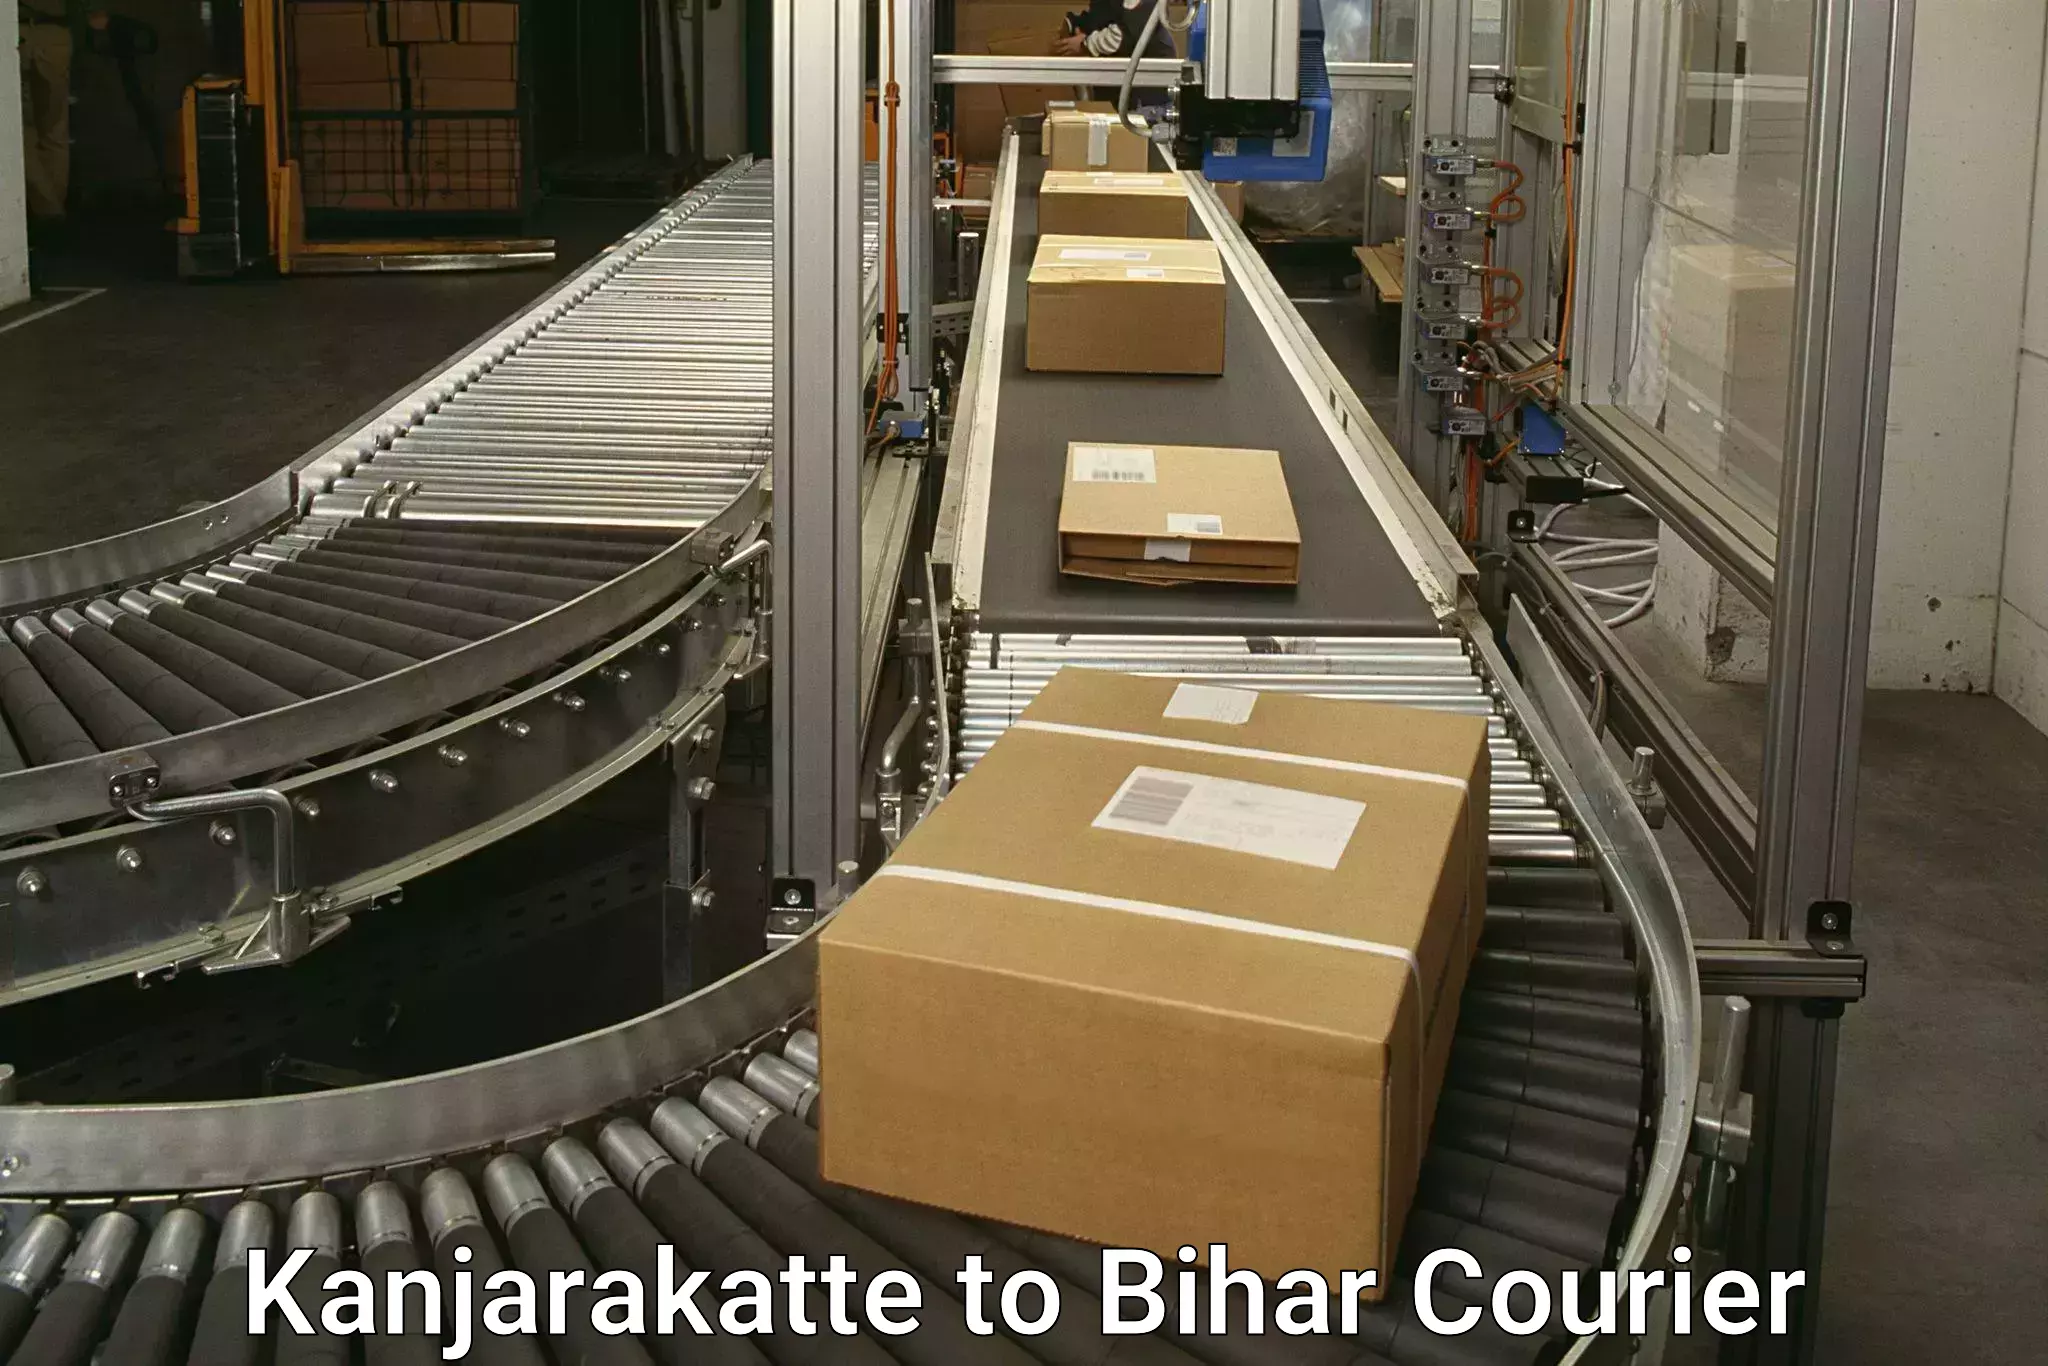 High-speed delivery Kanjarakatte to Aurangabad Bihar